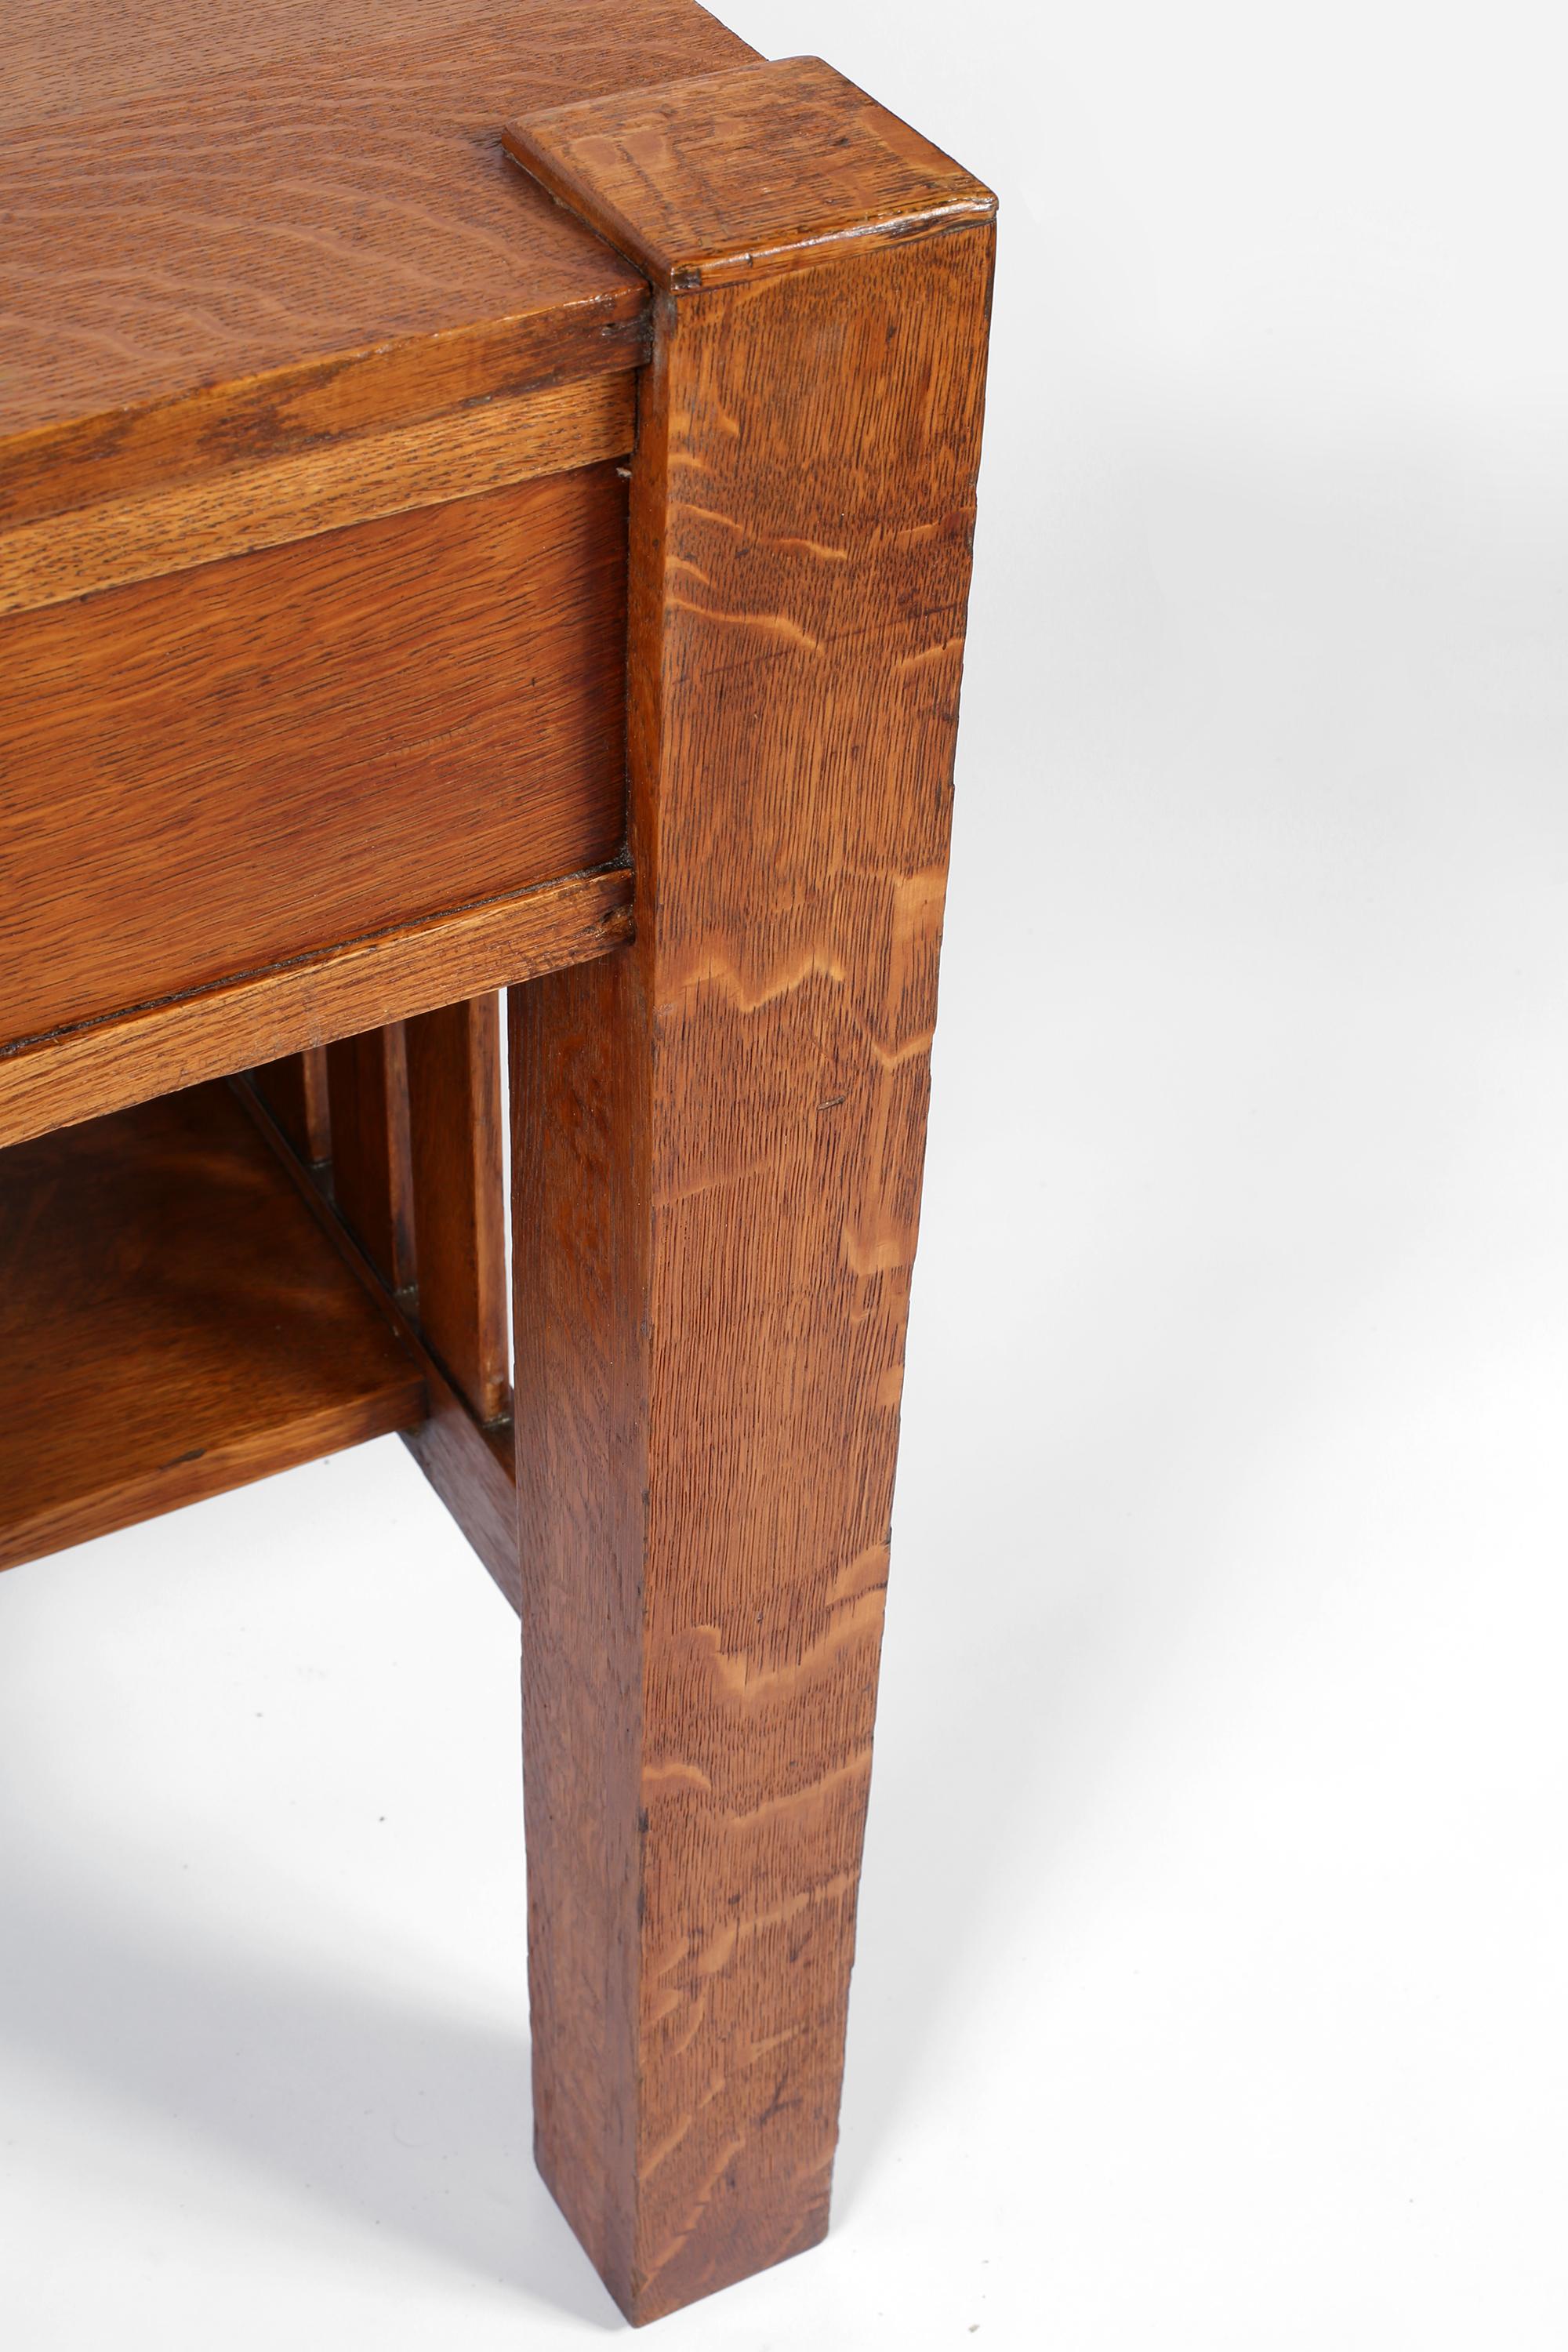 American Oak Arts & Crafts Desk circa 1900 in the Manner of Frank Lloyd Wright 5